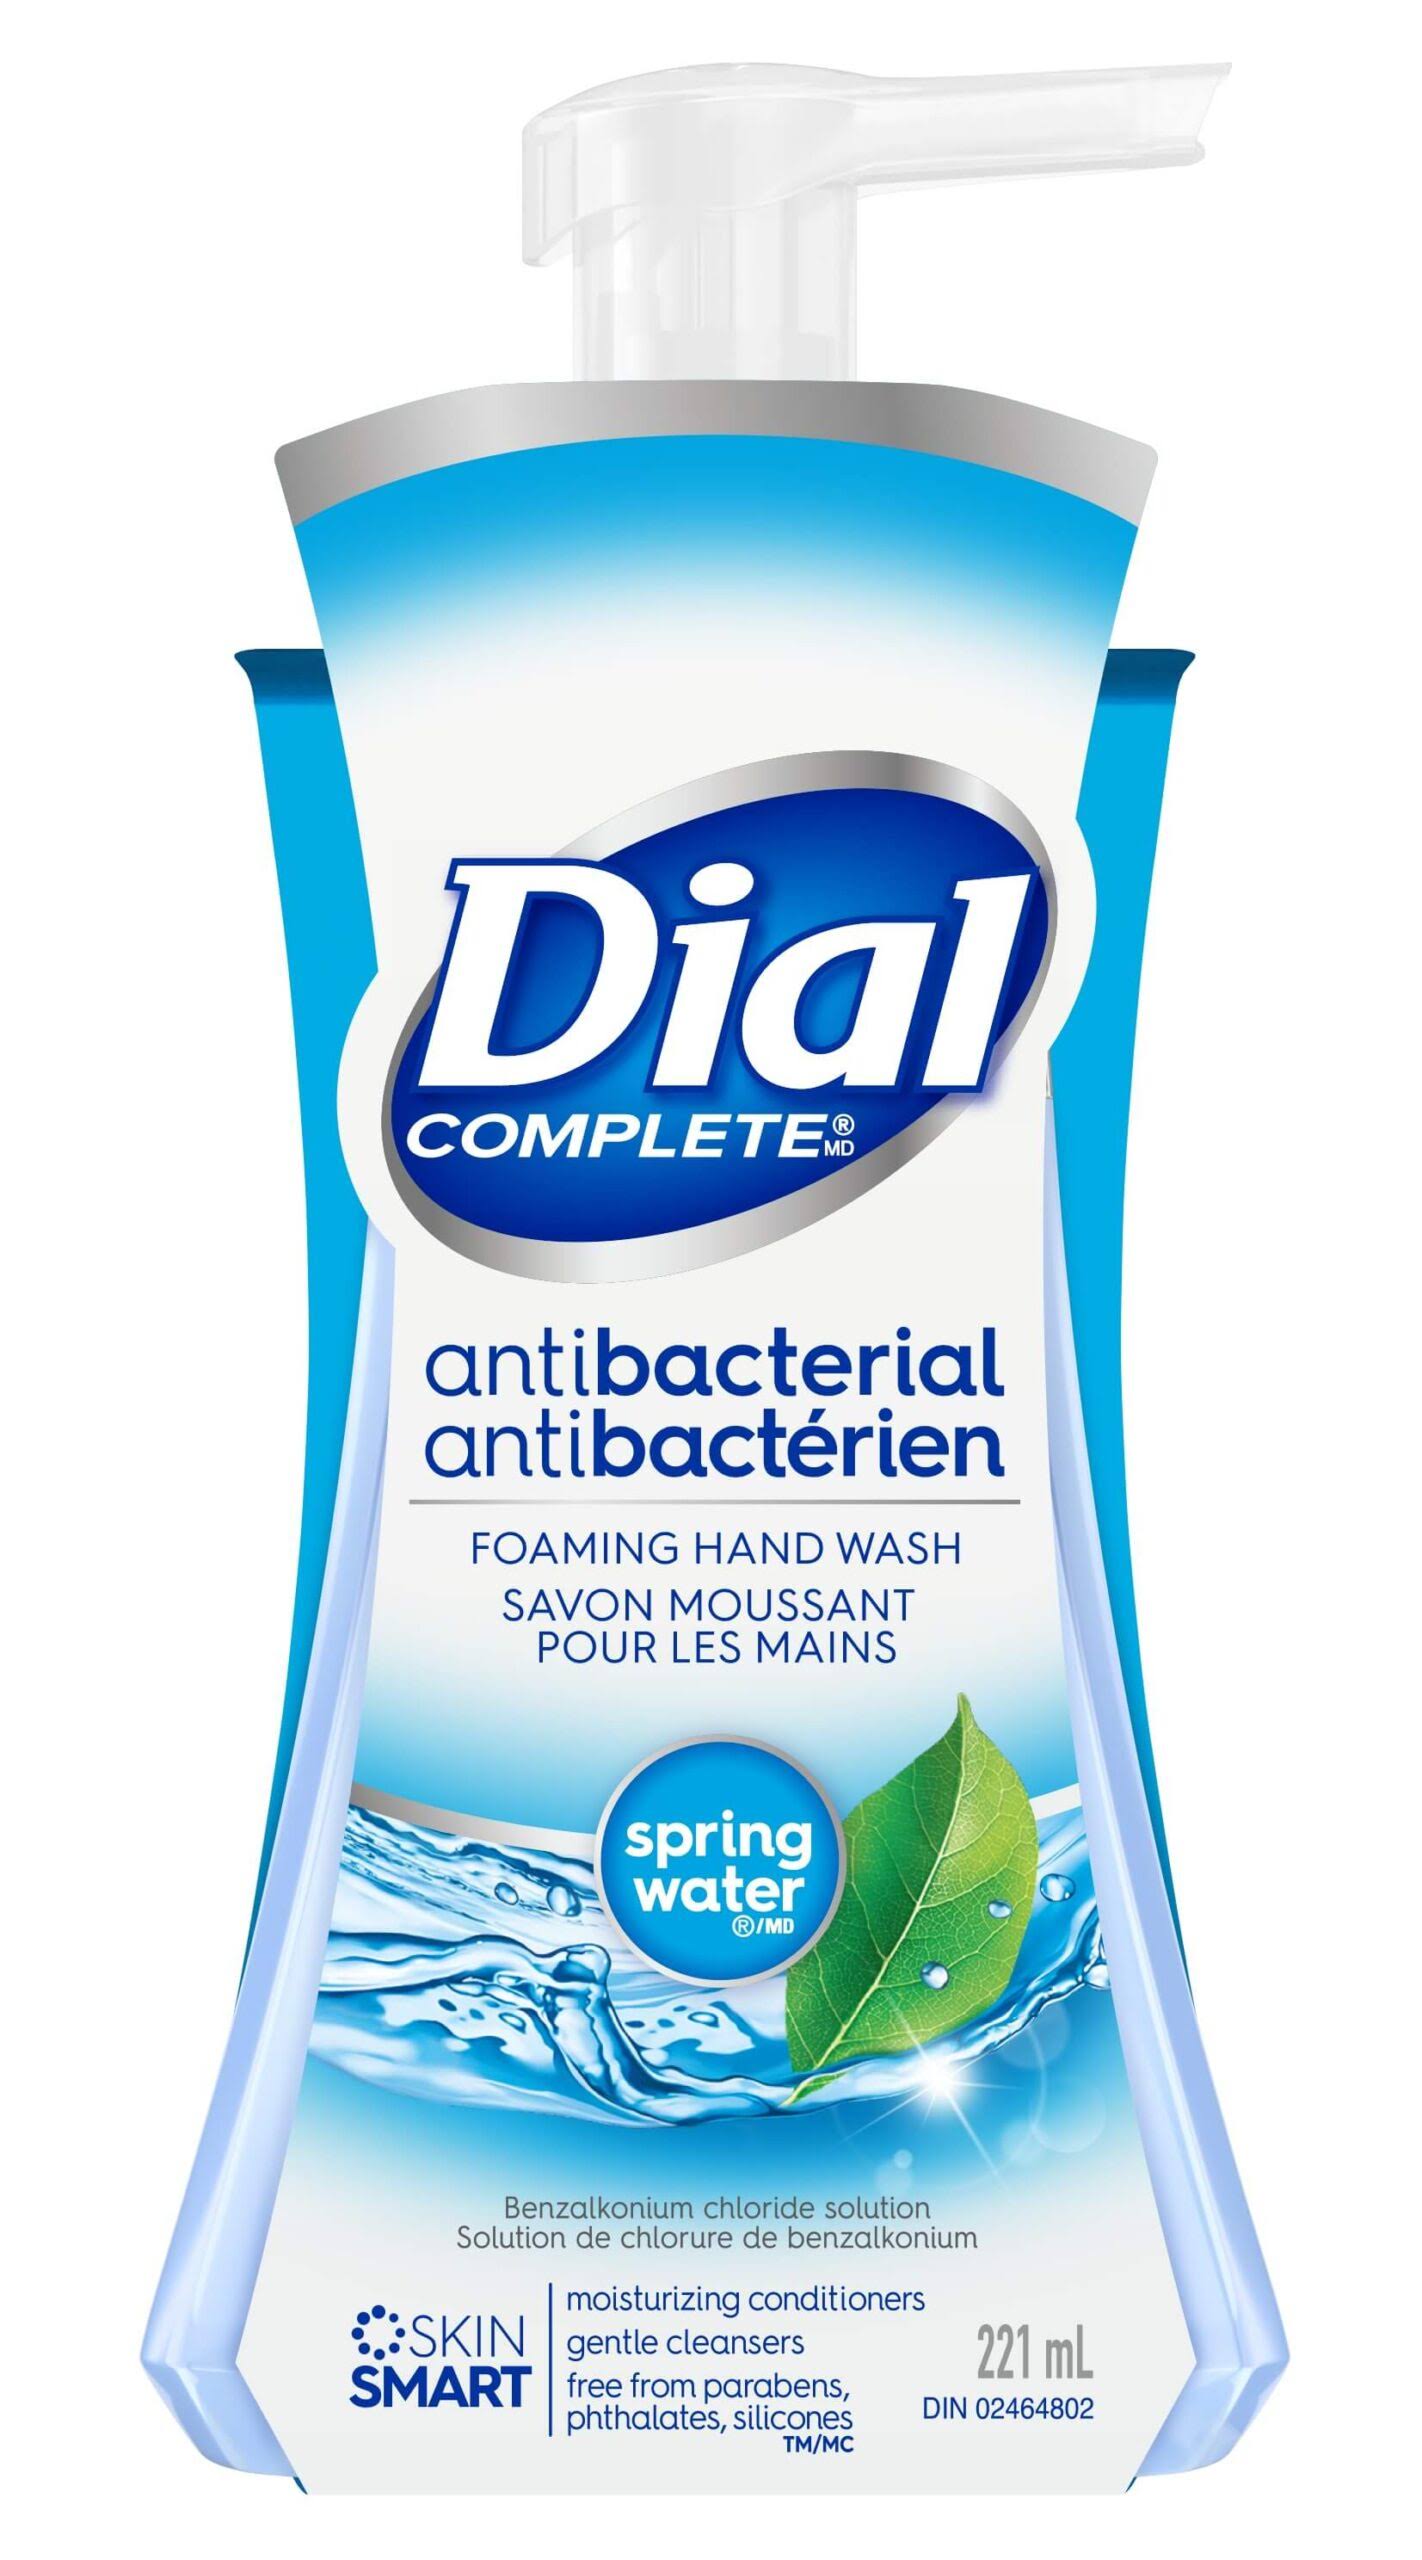 Dial Complete Antibacterial Foaming Hand Wash - 221ml